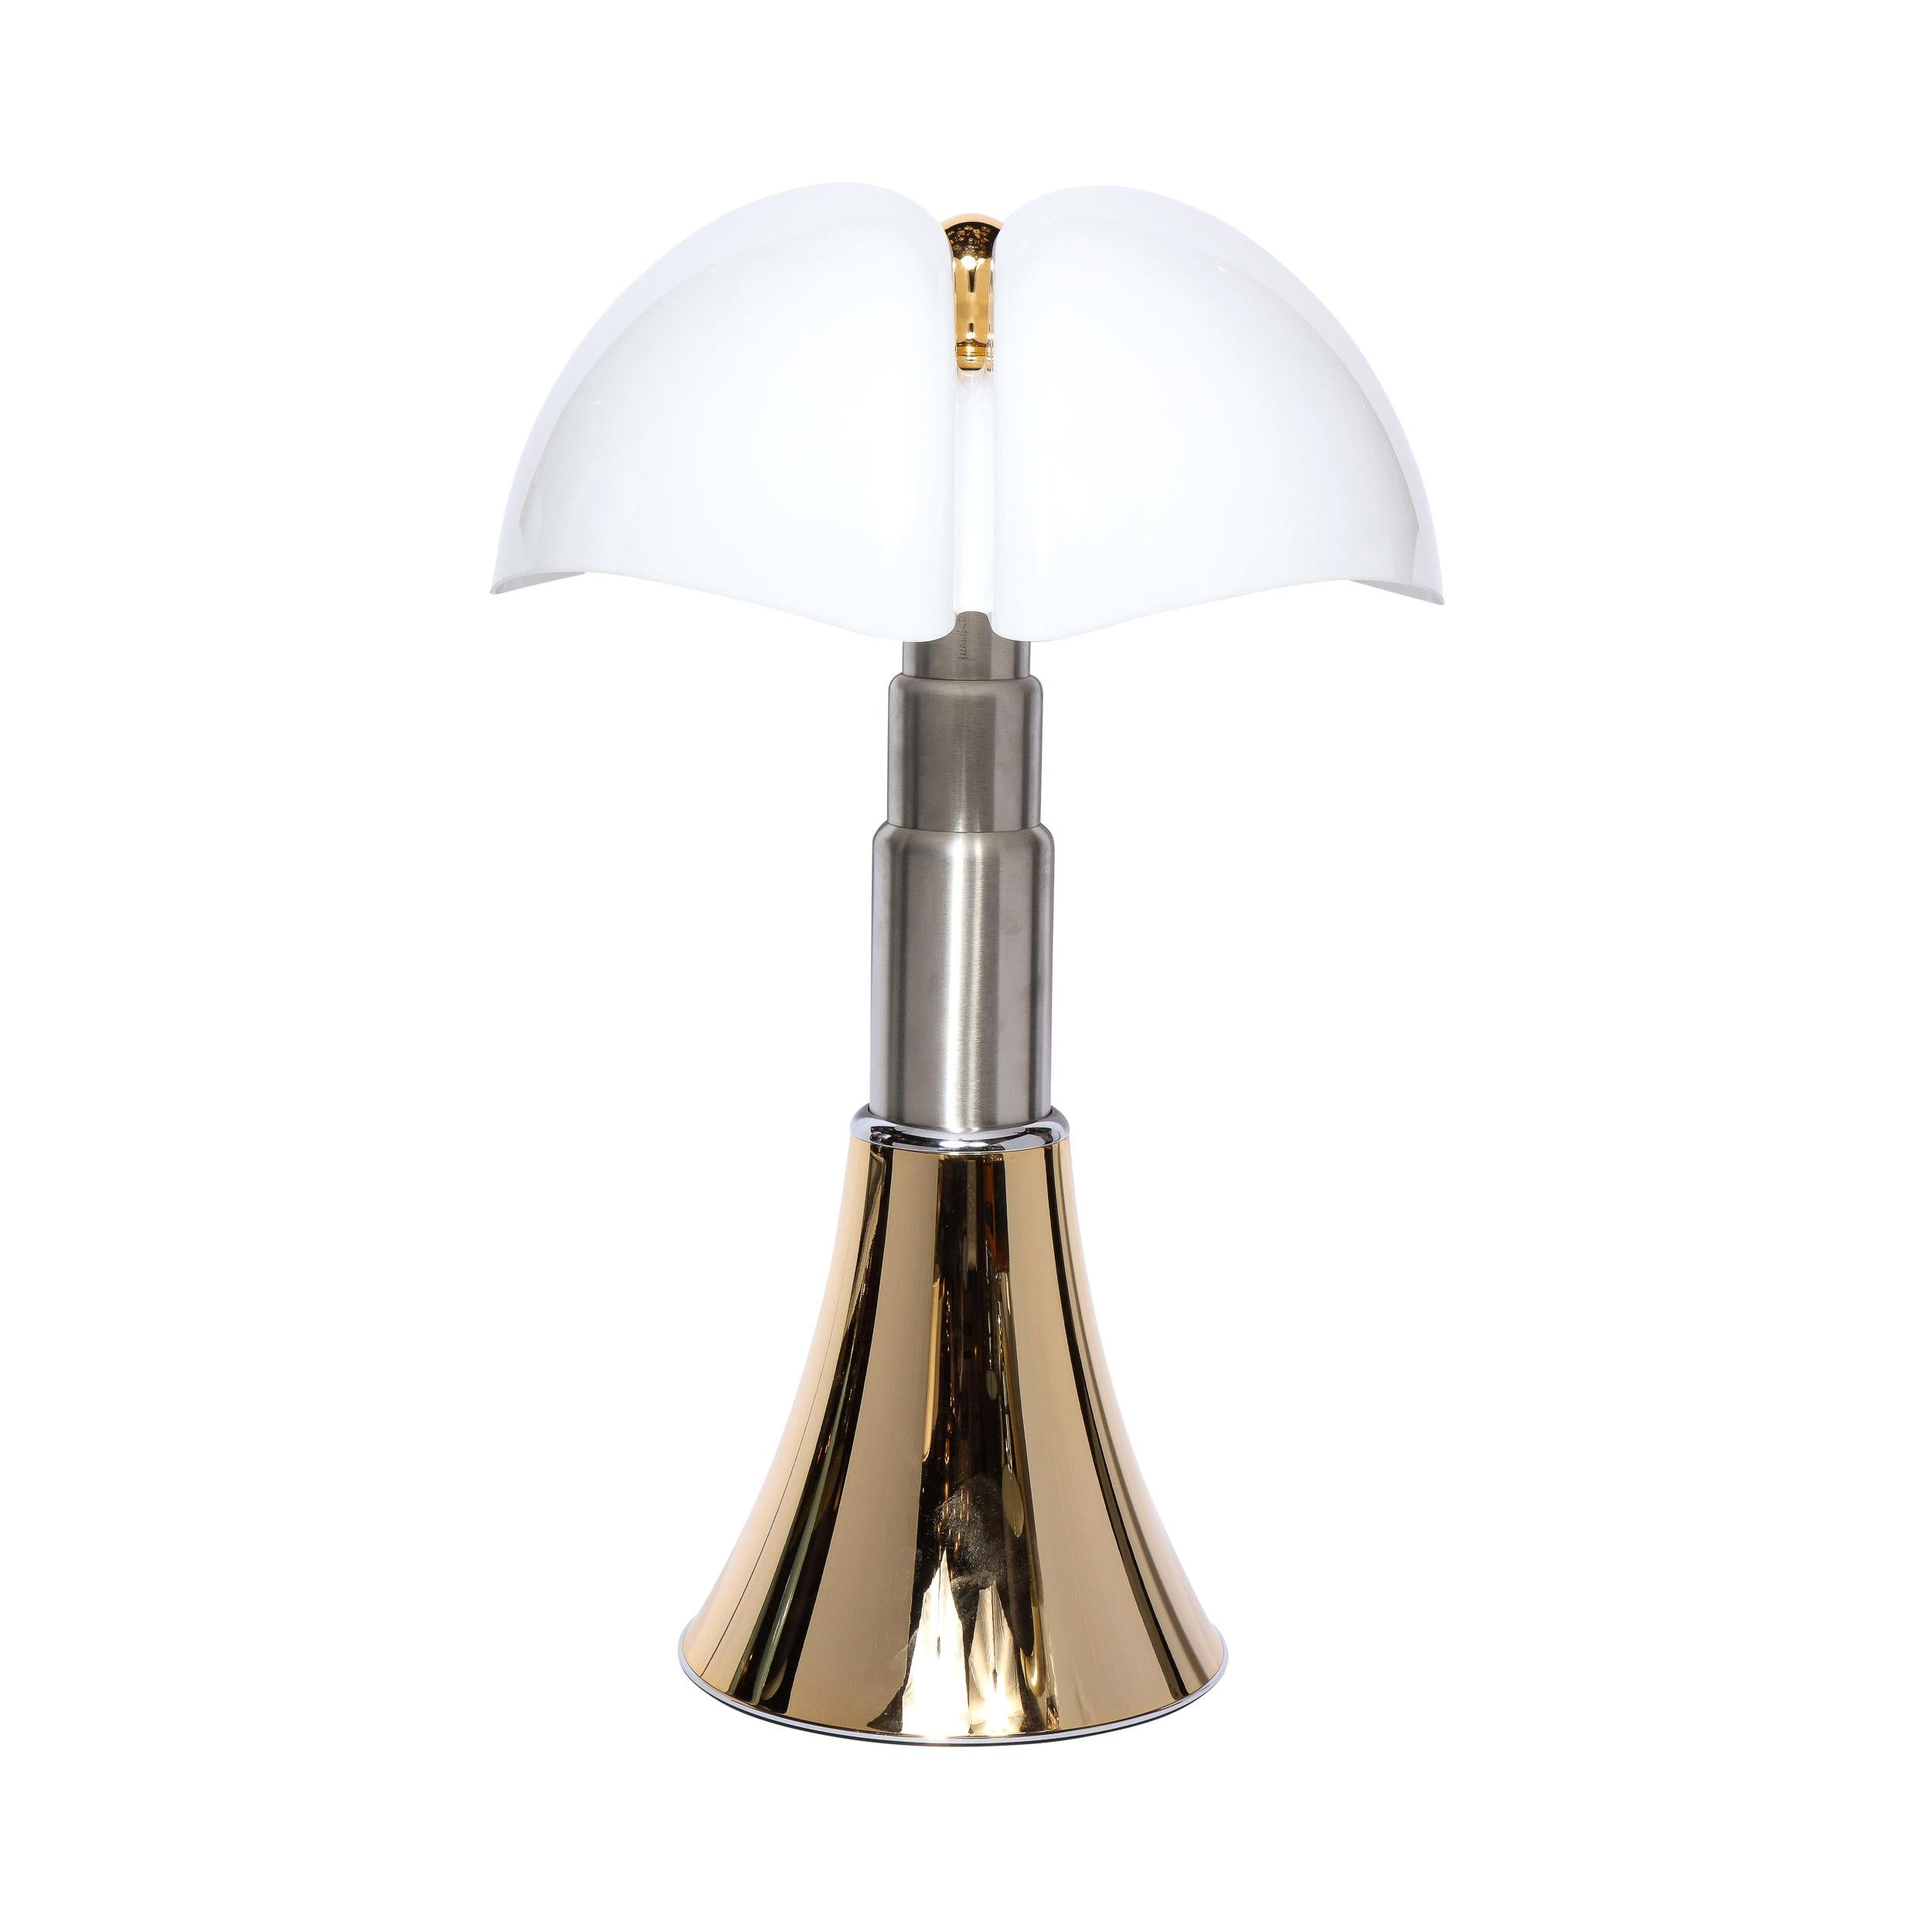 Modernist Pipistrello Brass & Lucite Lamp by Gae Aulenti for Martinelli Luce